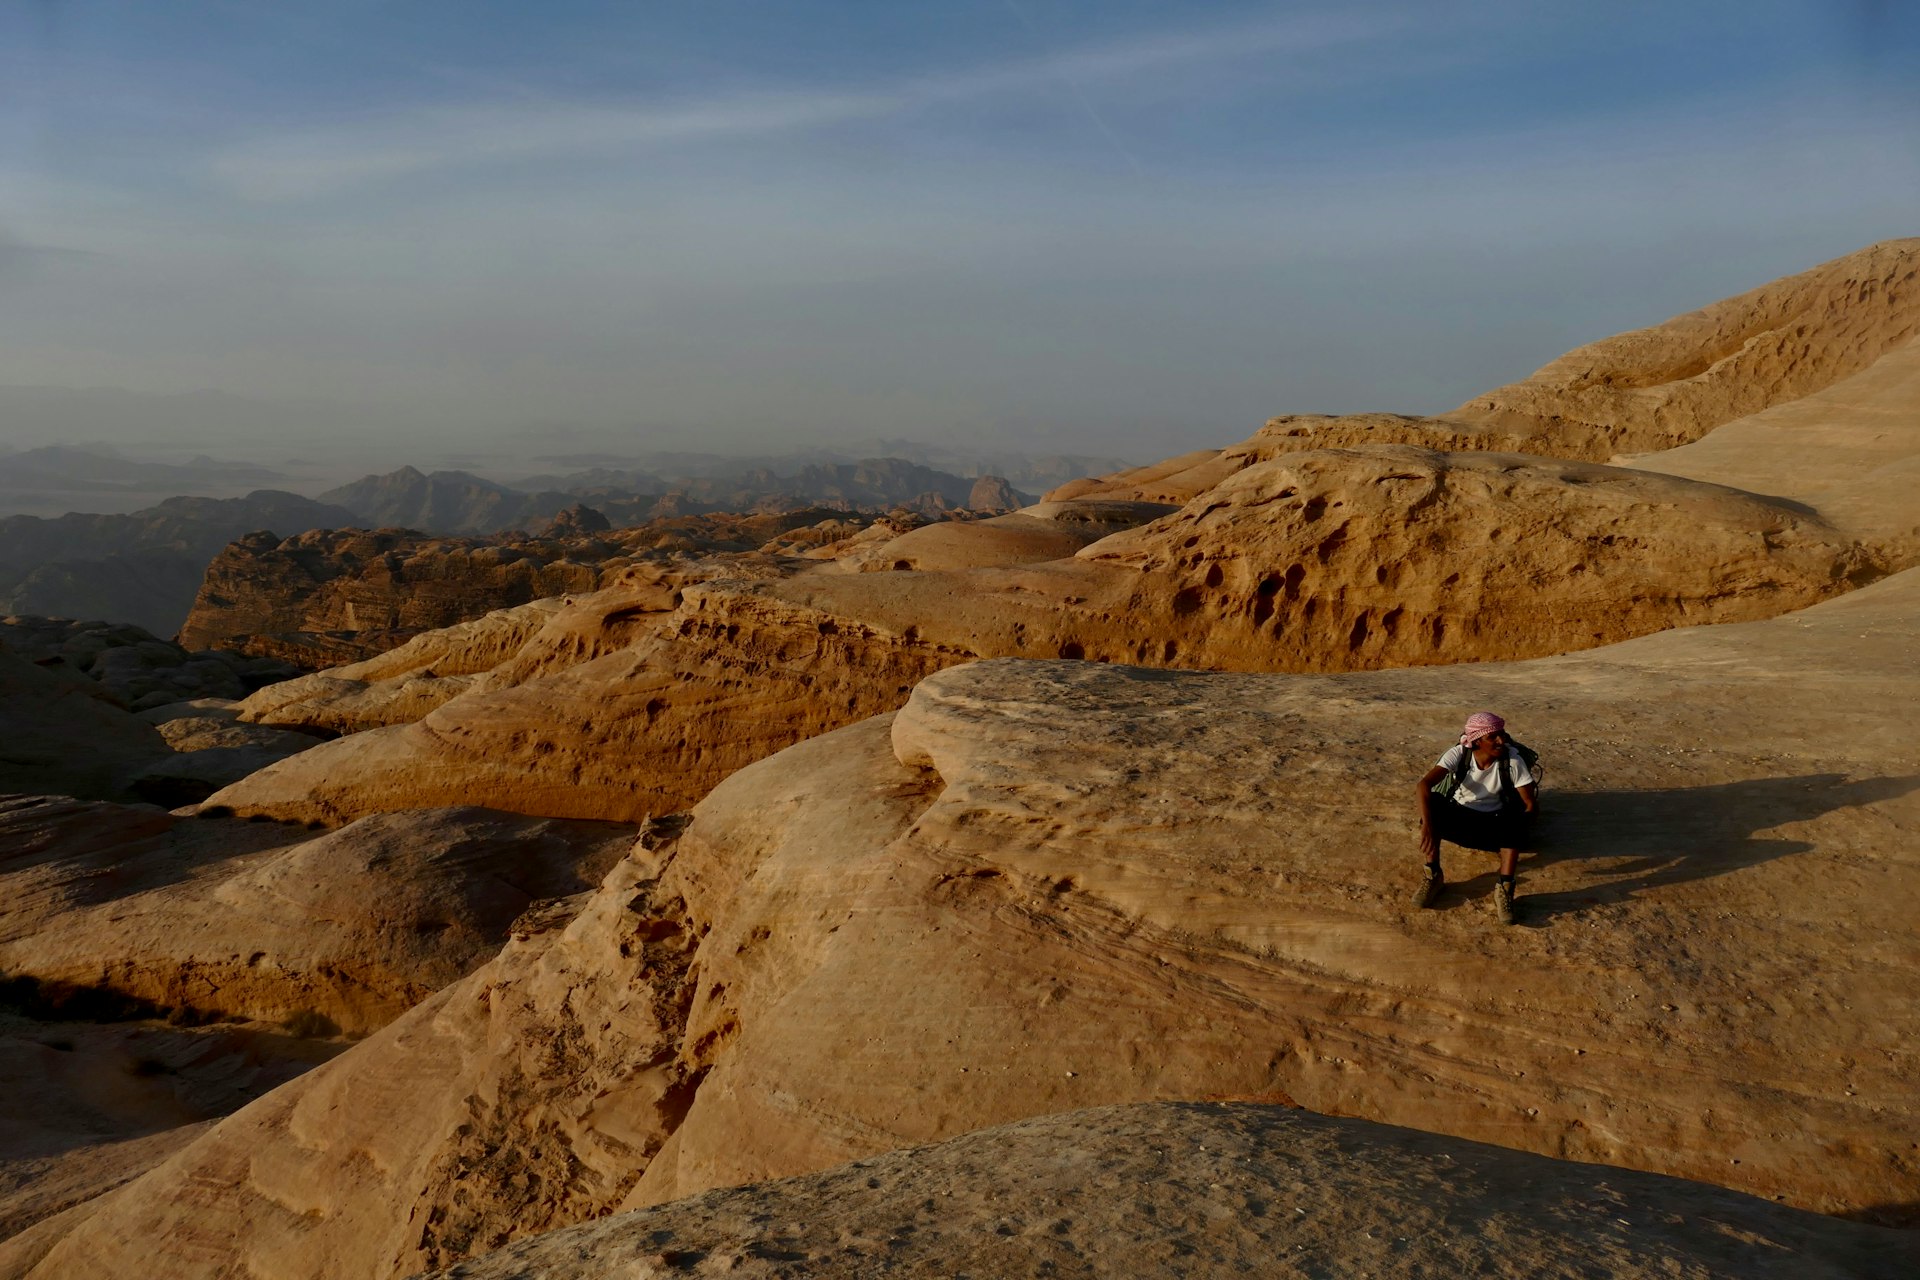 A Bedouin climbing guide rests on the high sandstone uplands of Jebel Rum, Wadi Rum, Jordan